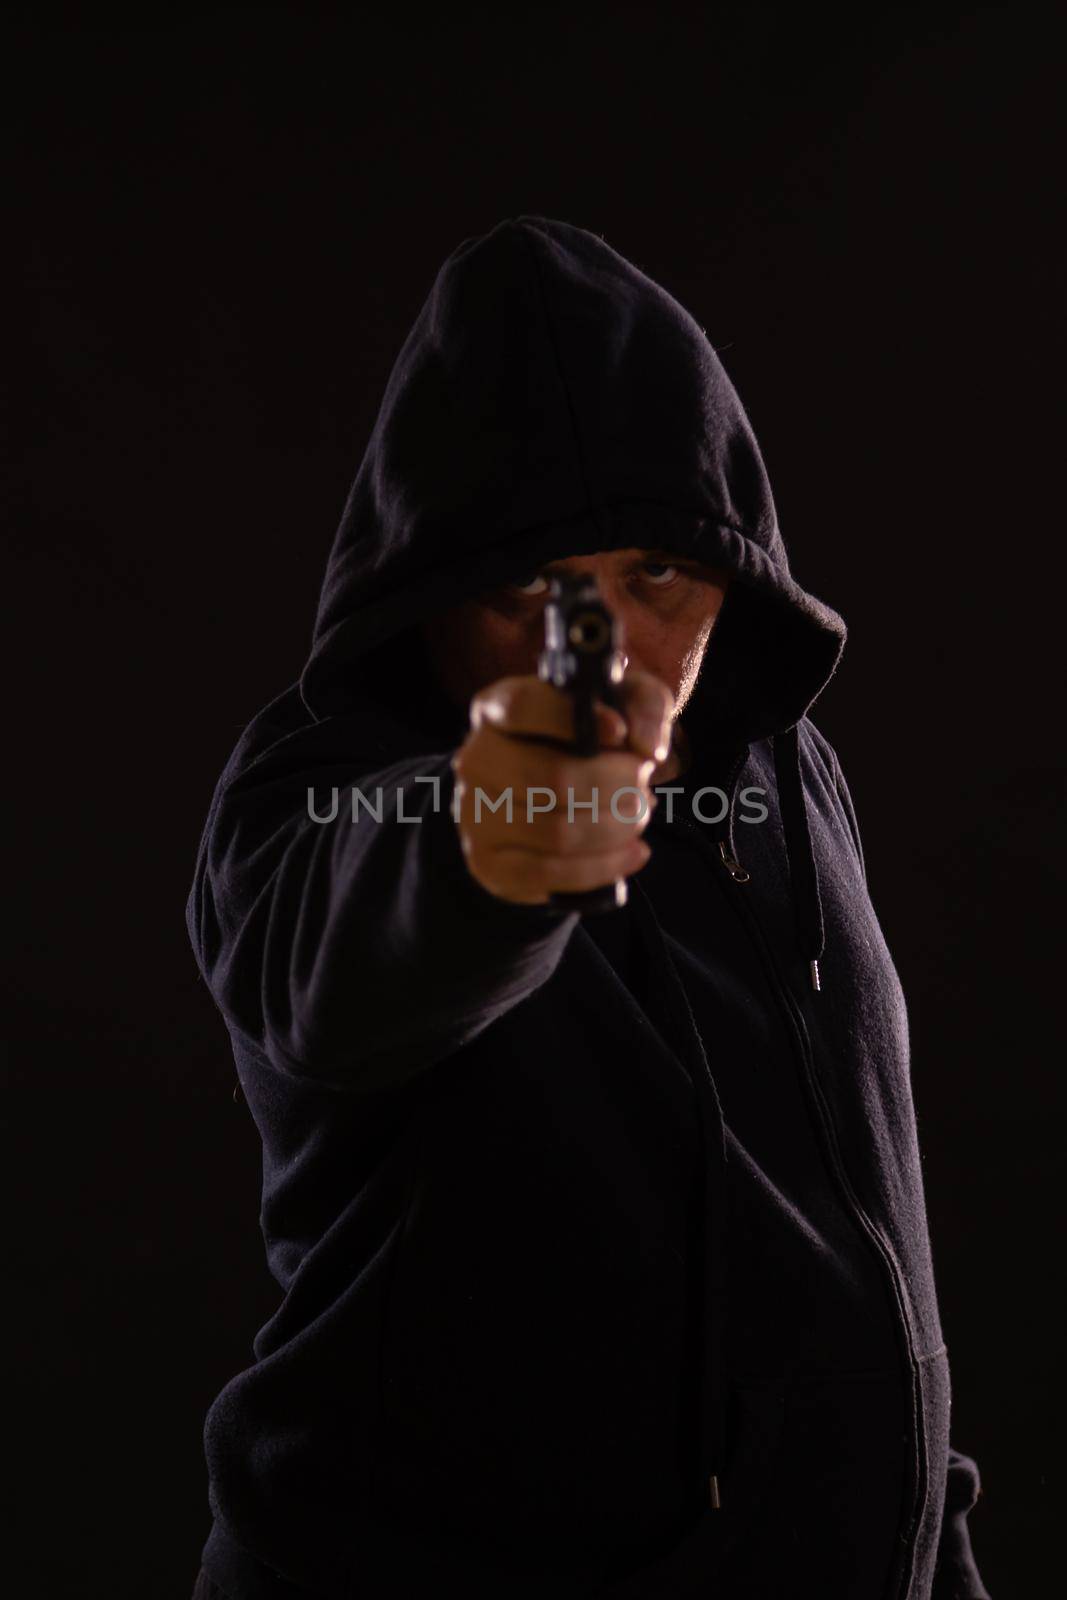 Man in black hoodie points pistol by imagesbykenny